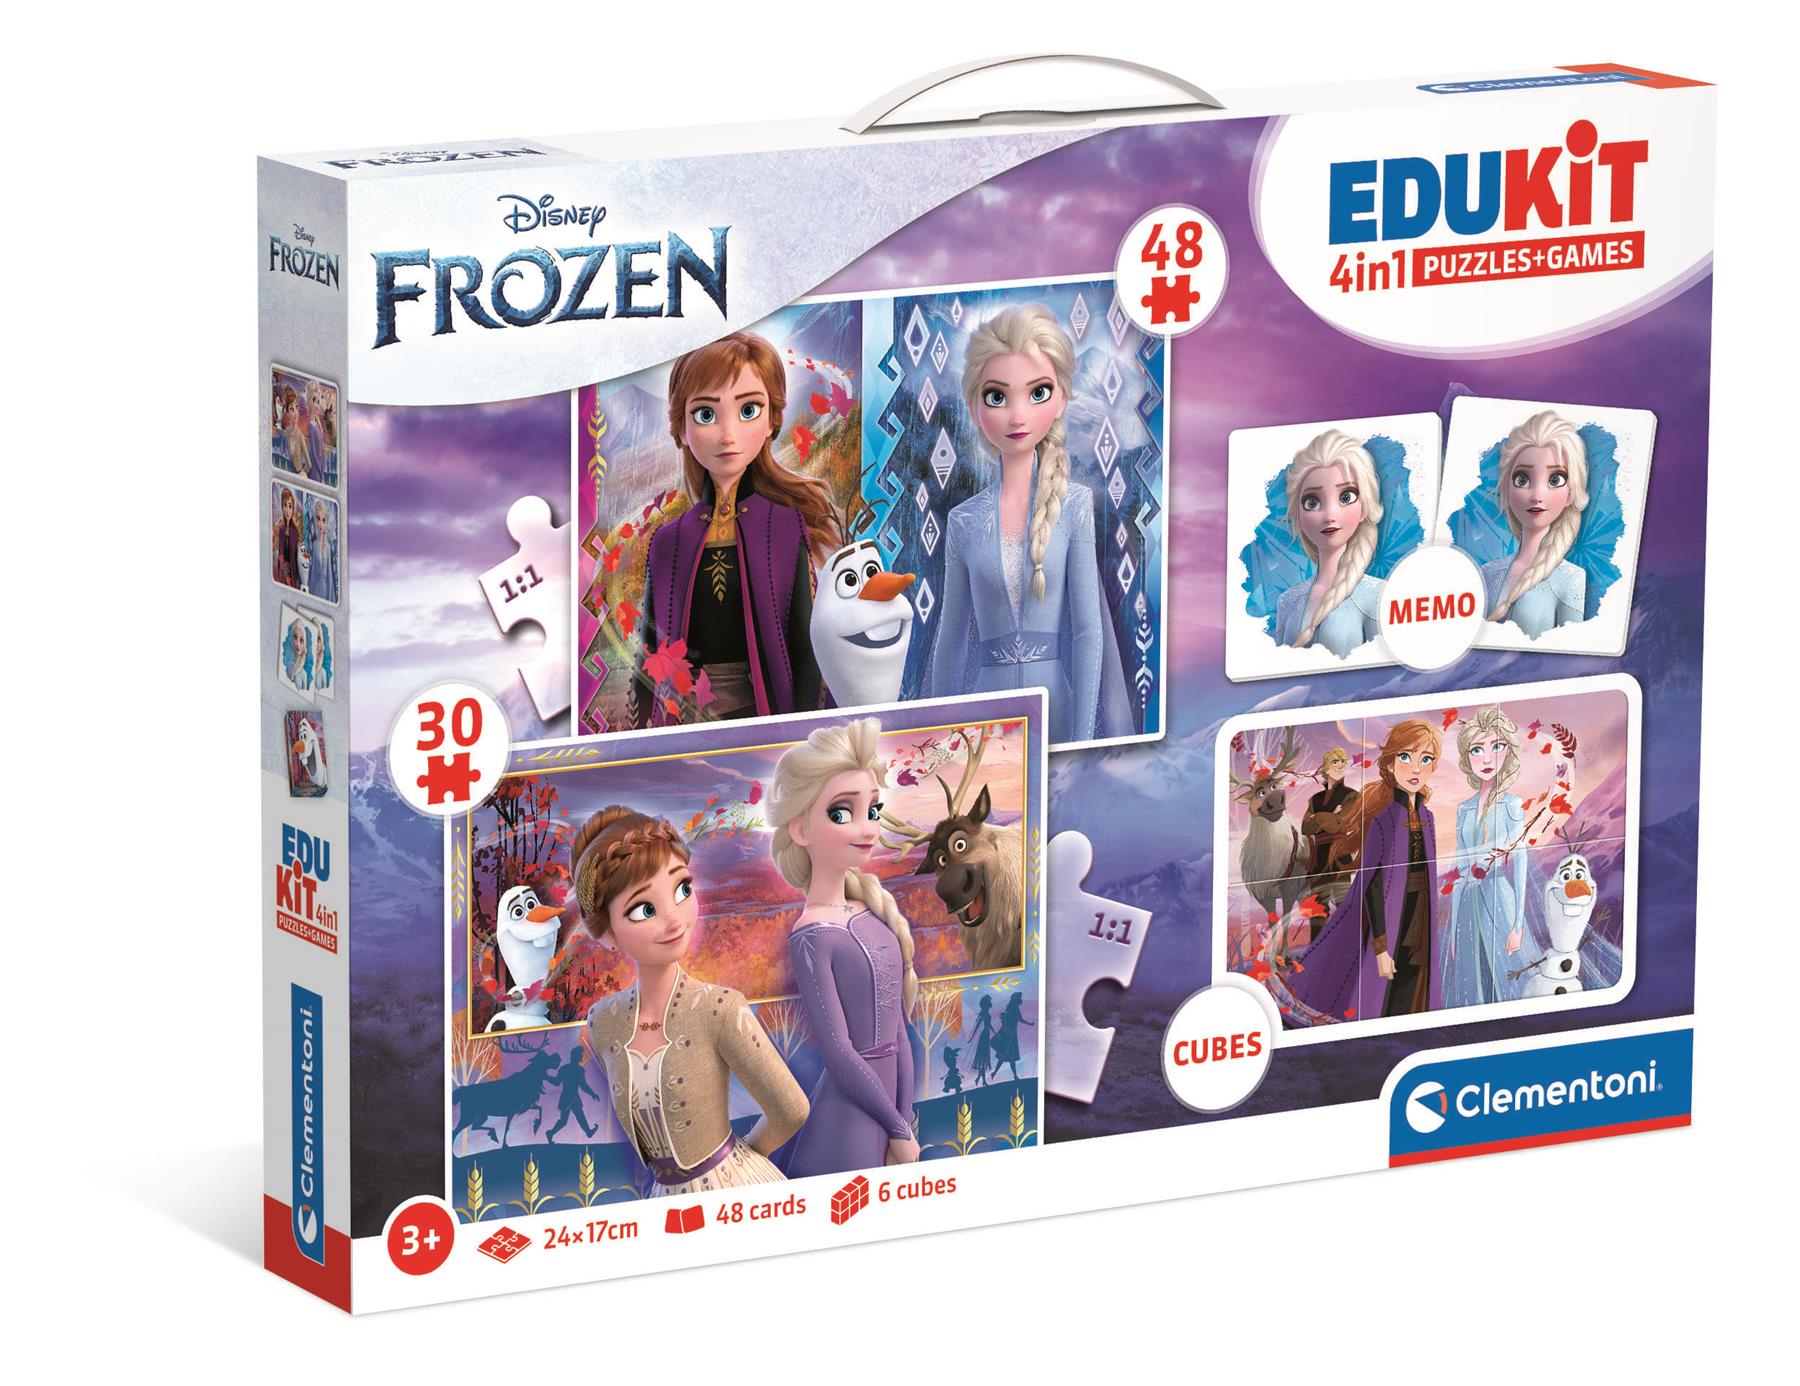 Clementoni Disney Frozen Edukit 4in1 Puzzle and Games Set